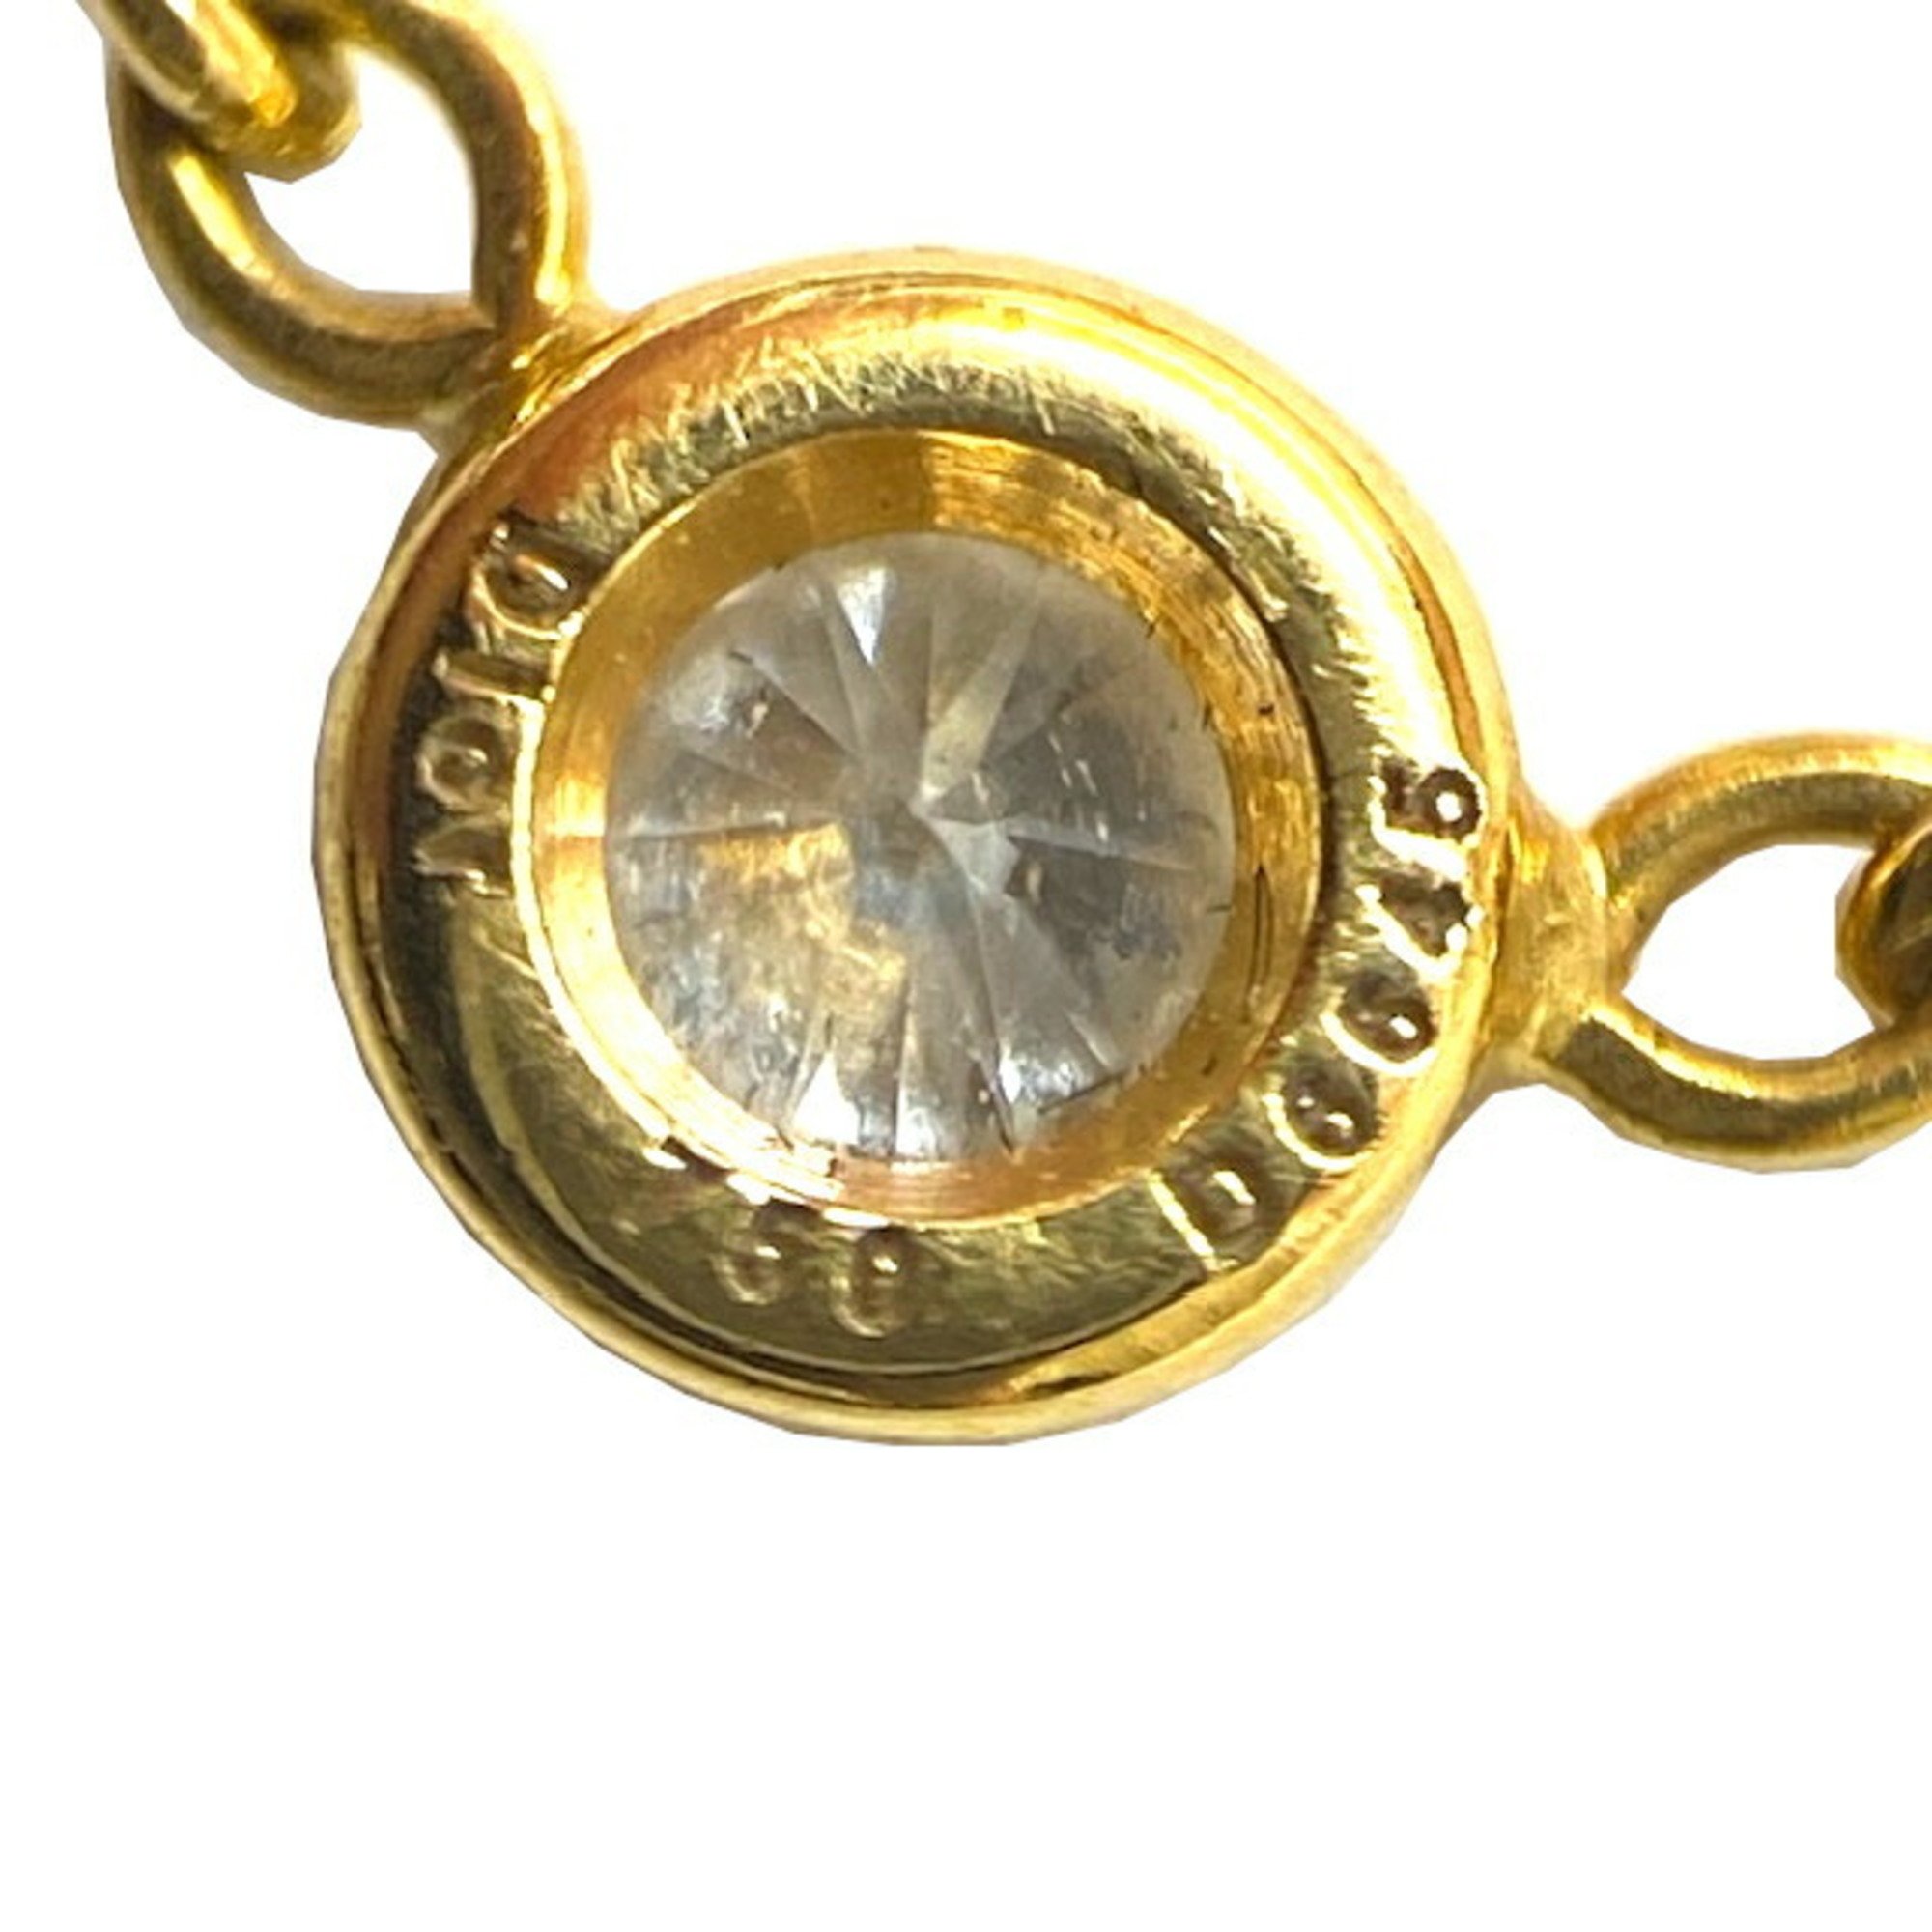 Christian Dior Mimiwi Necklace 1PD Diamond K18YG